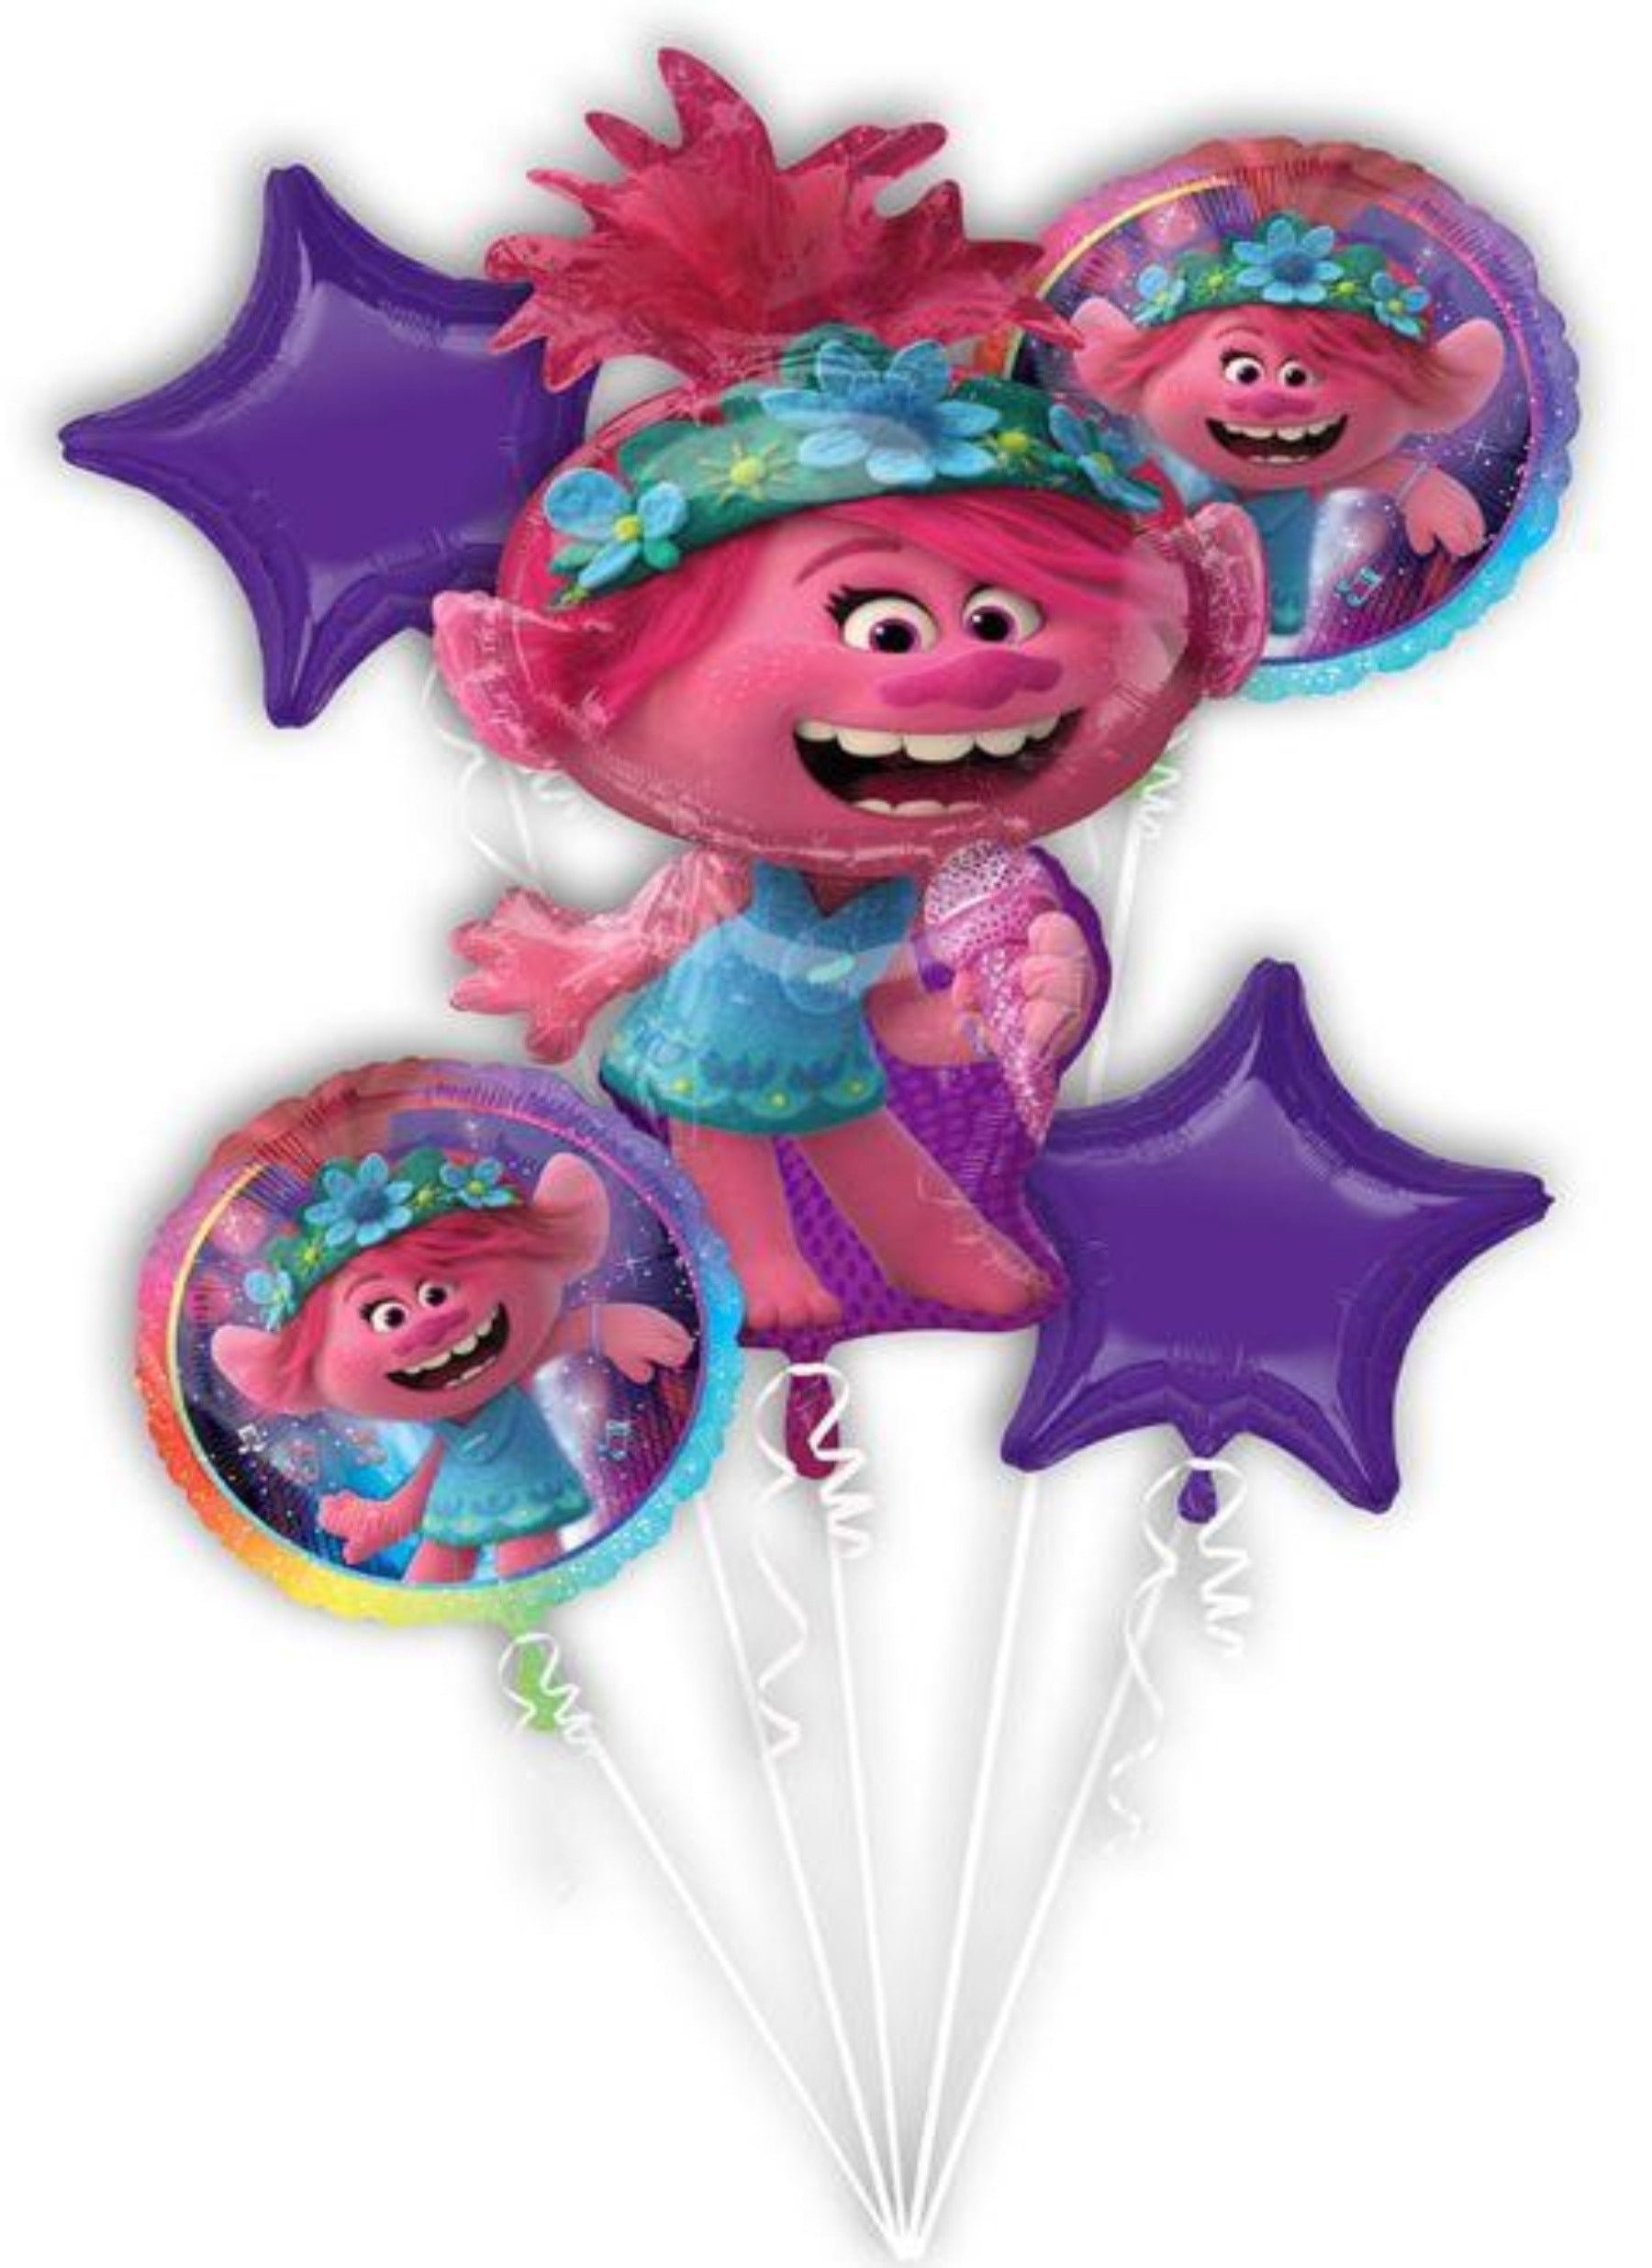 Trolls2 Balloon Bouquet - Let's Party! Event Decor & Party Supplies